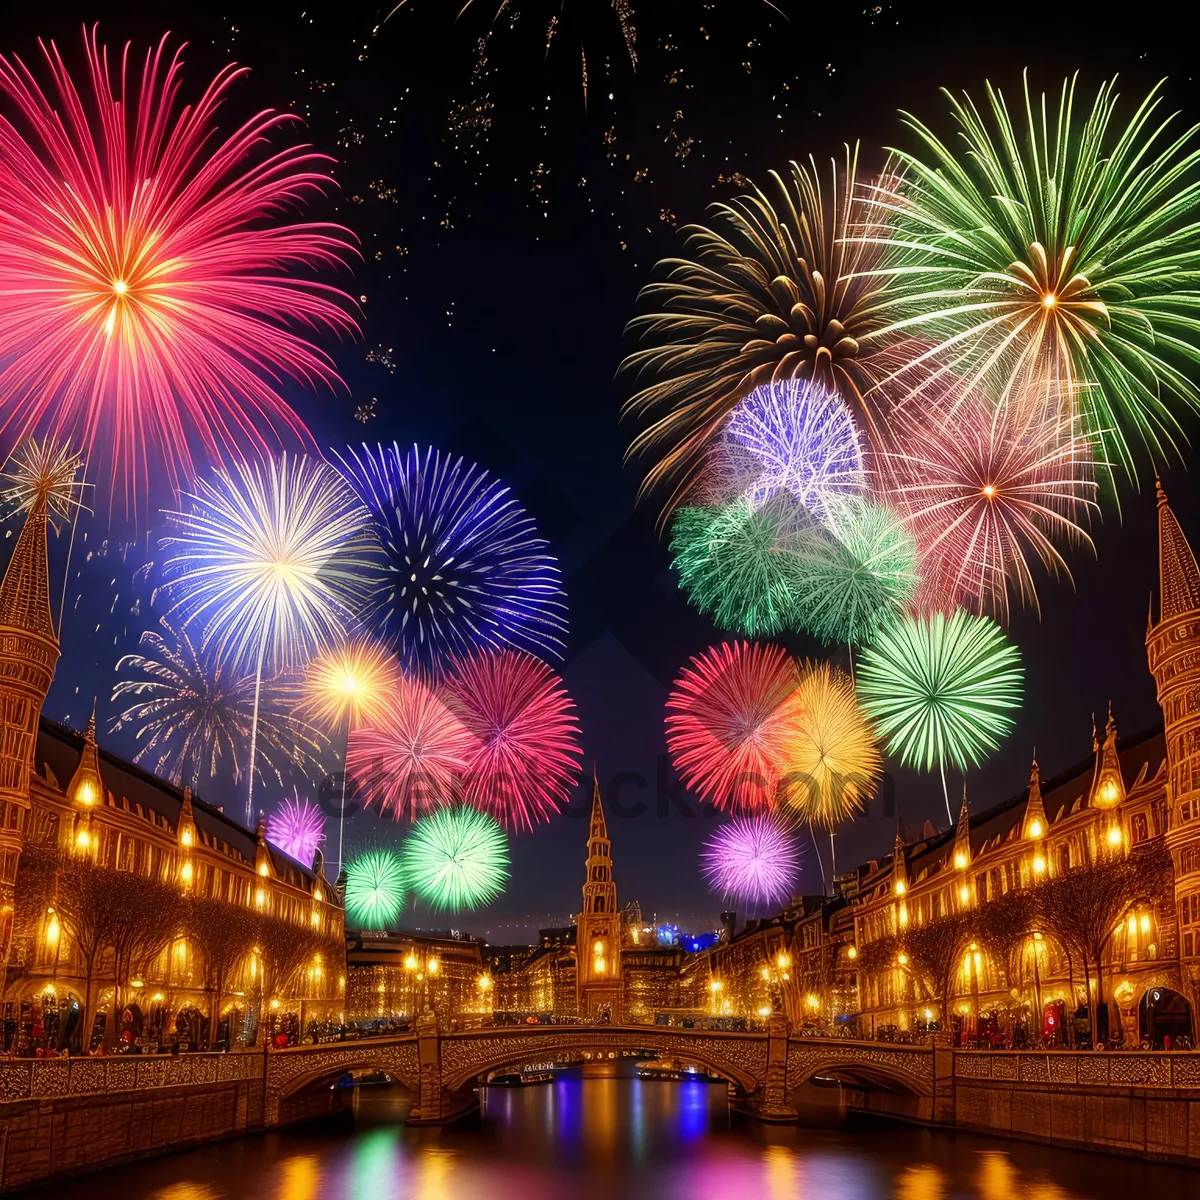 Picture of Festive Fireworks Illuminate the Night Sky